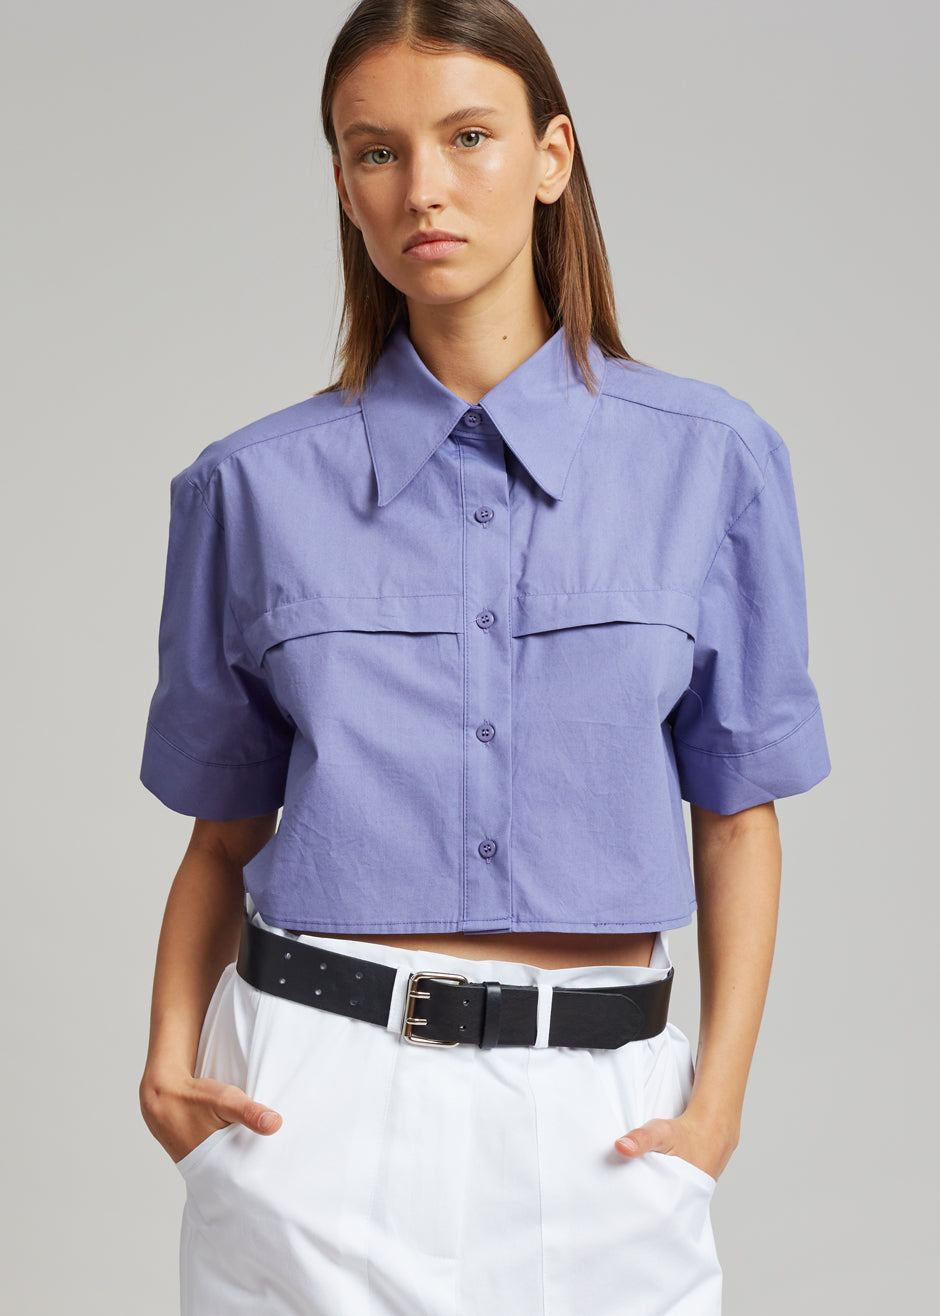 Ada Cropped Pocket Shirt - Purple - 6